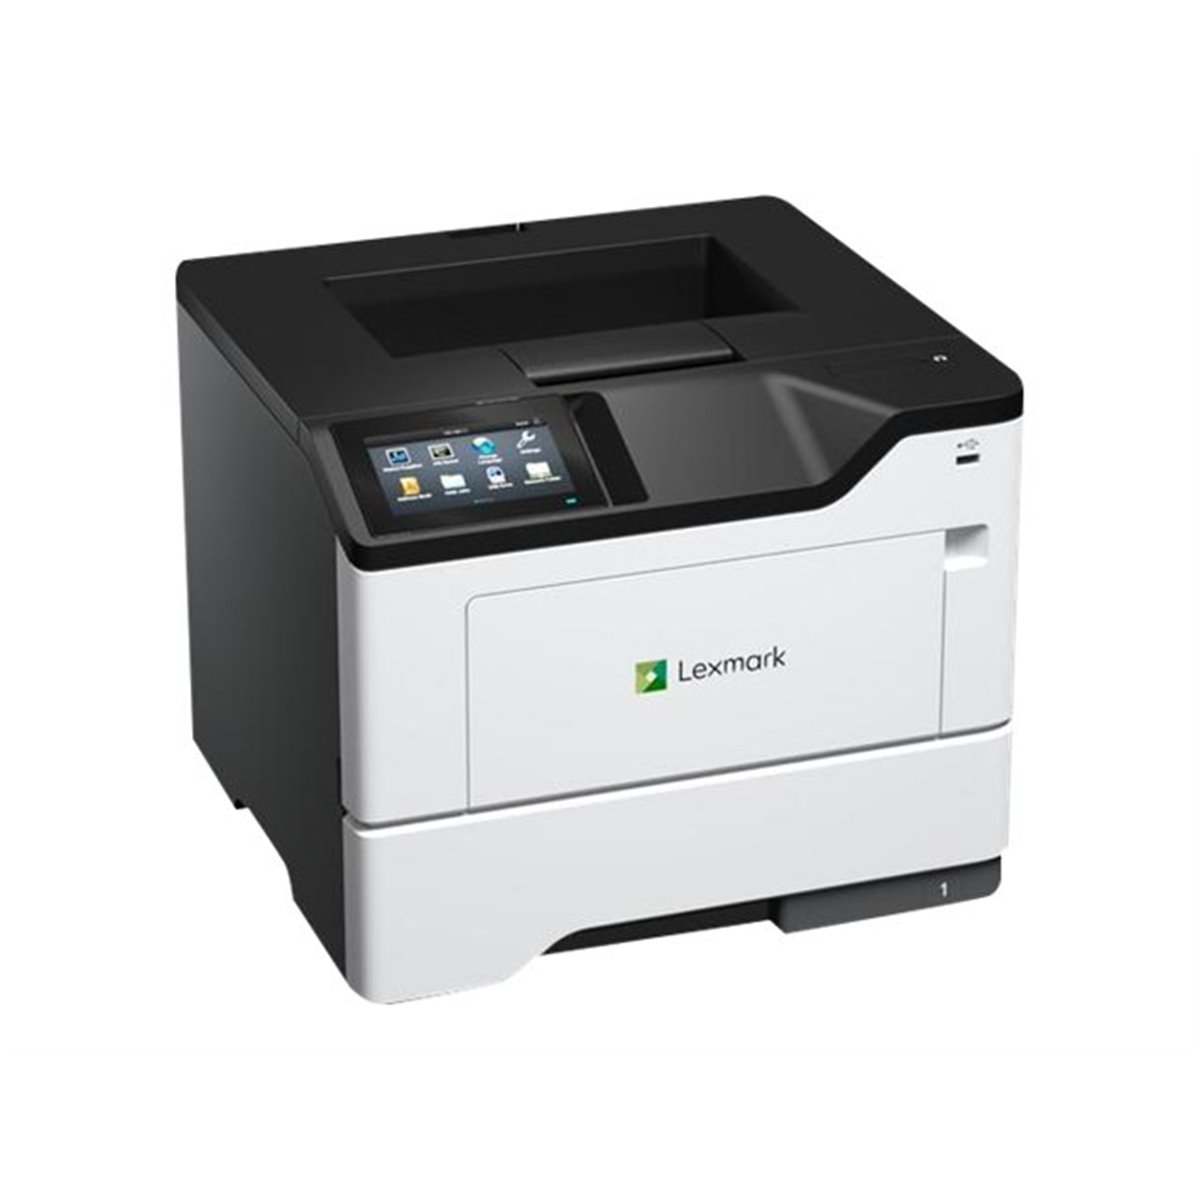 Lexmark MS632dwe Monochrome Singlefunction Printer HV EMEA 47ppm - Printer